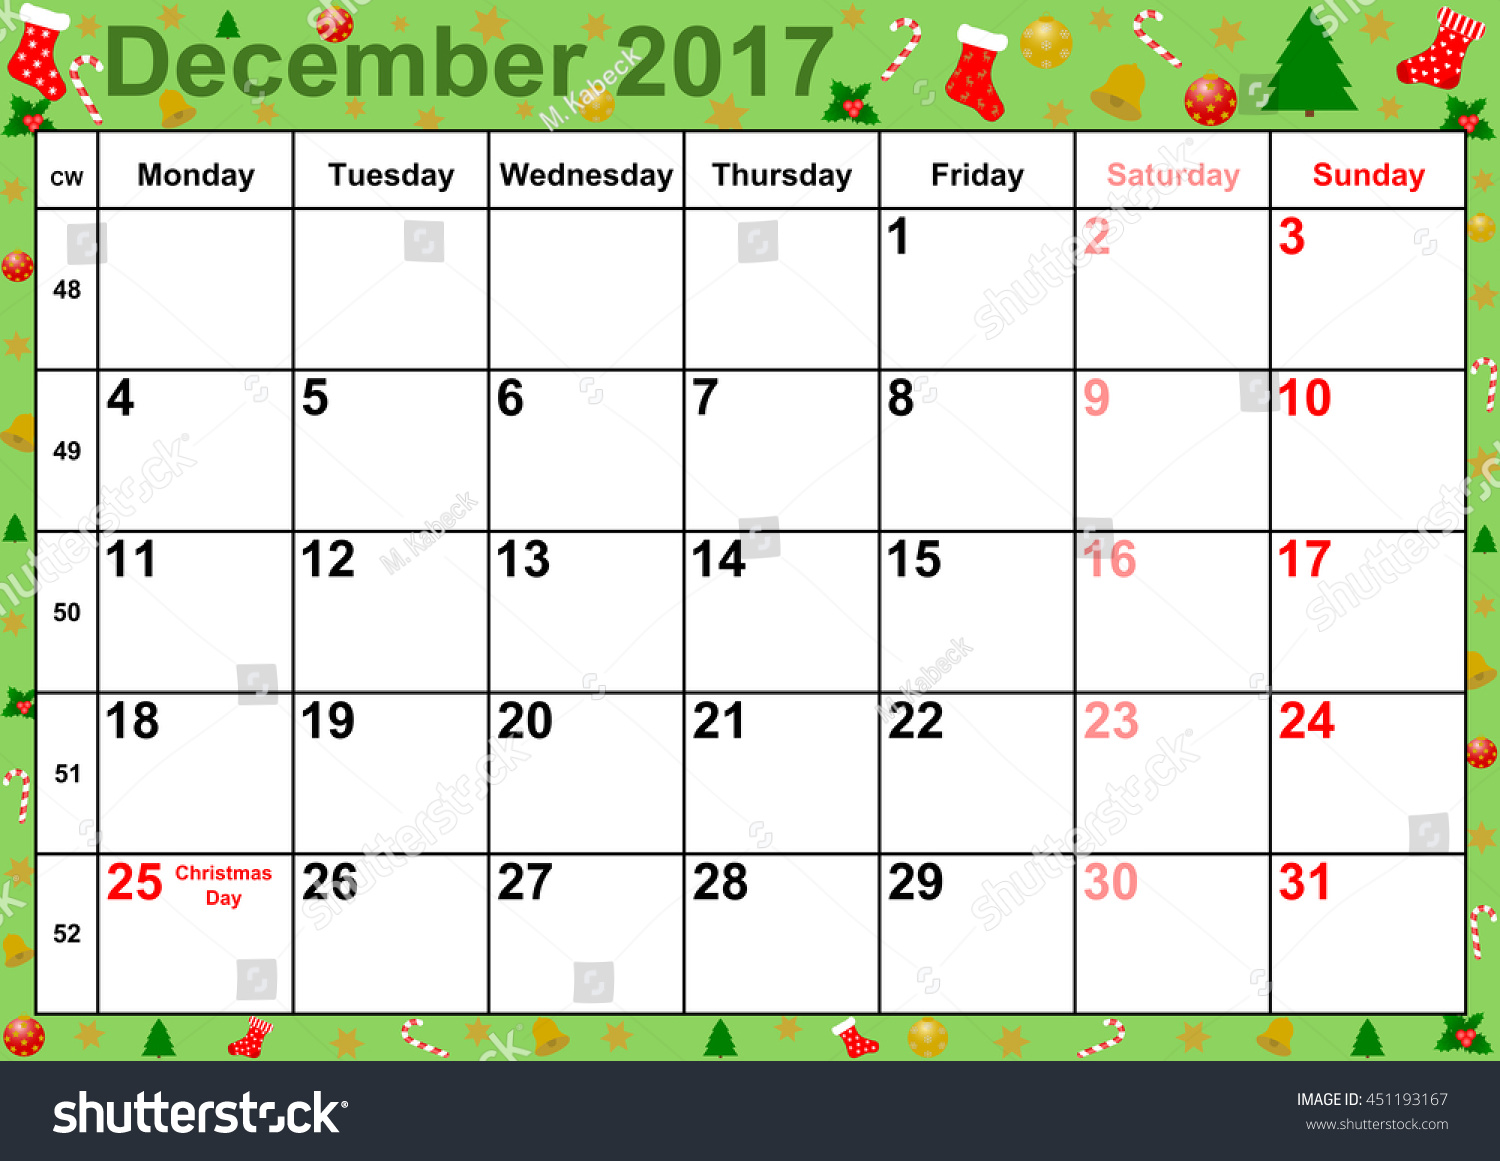 calendar-2017-months-december-holidays-us-stock-illustration-451193167